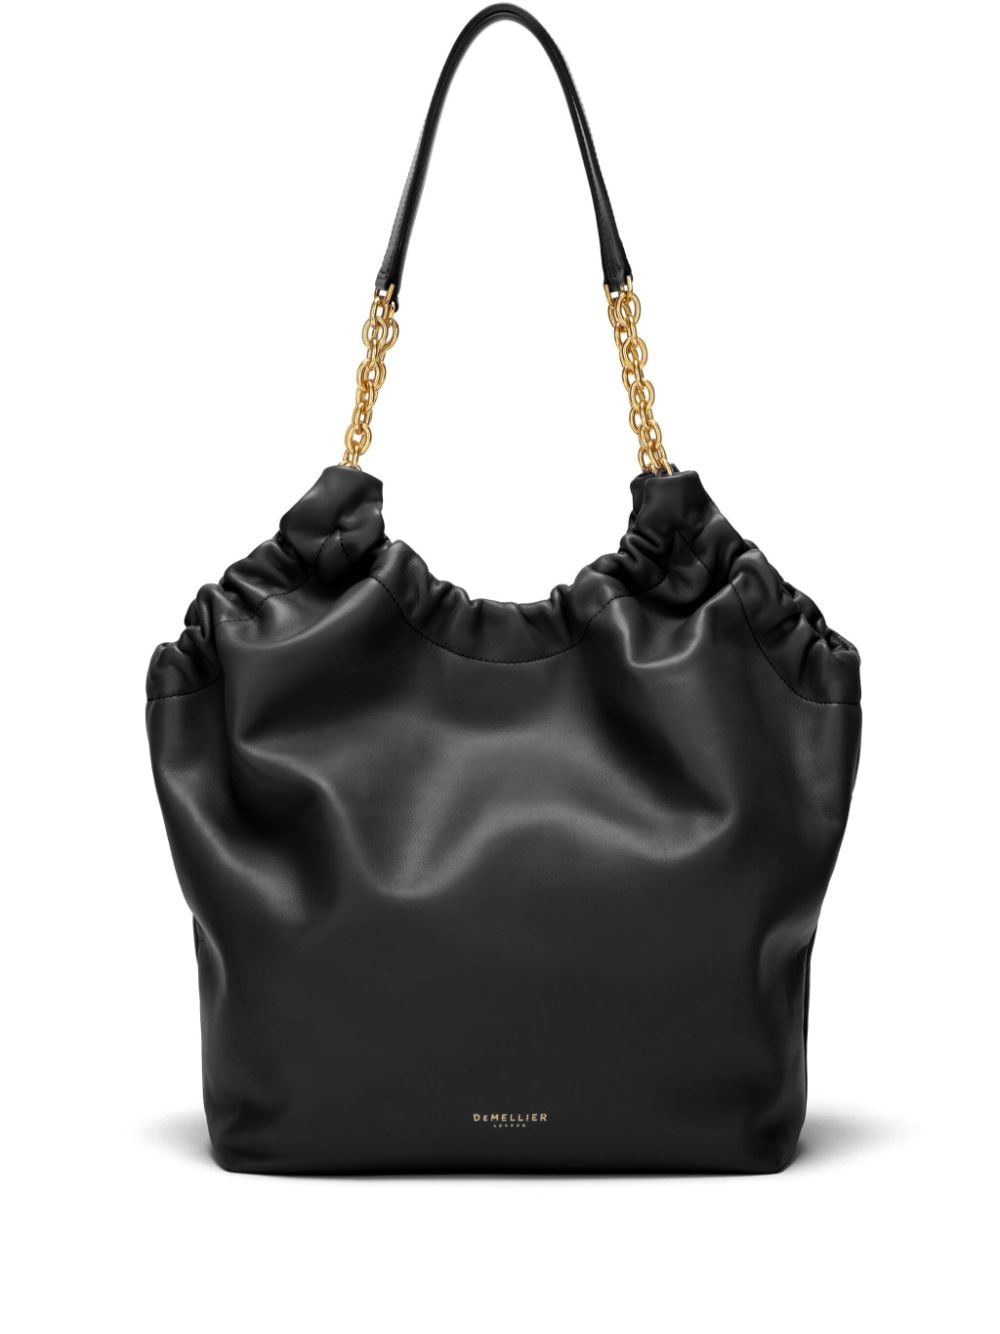 The Miami leather tote bag